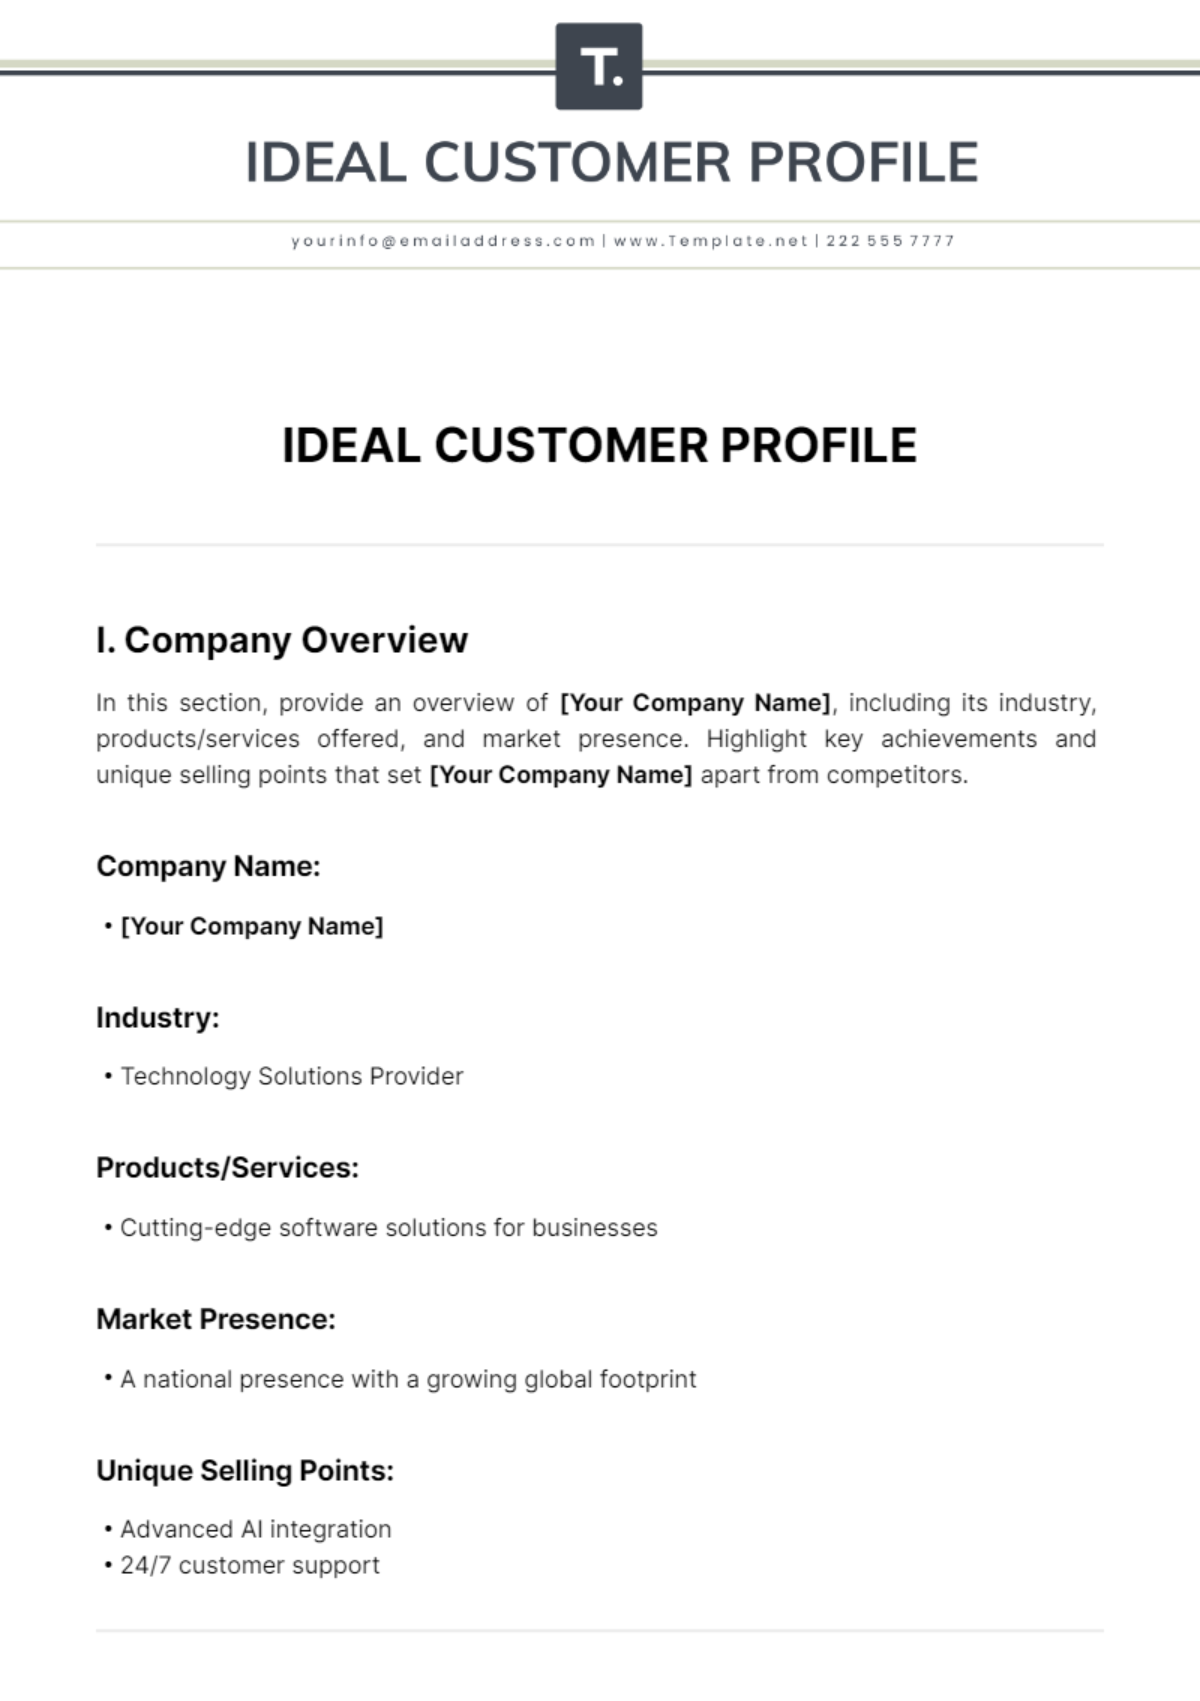 Ideal Customer Profile Template